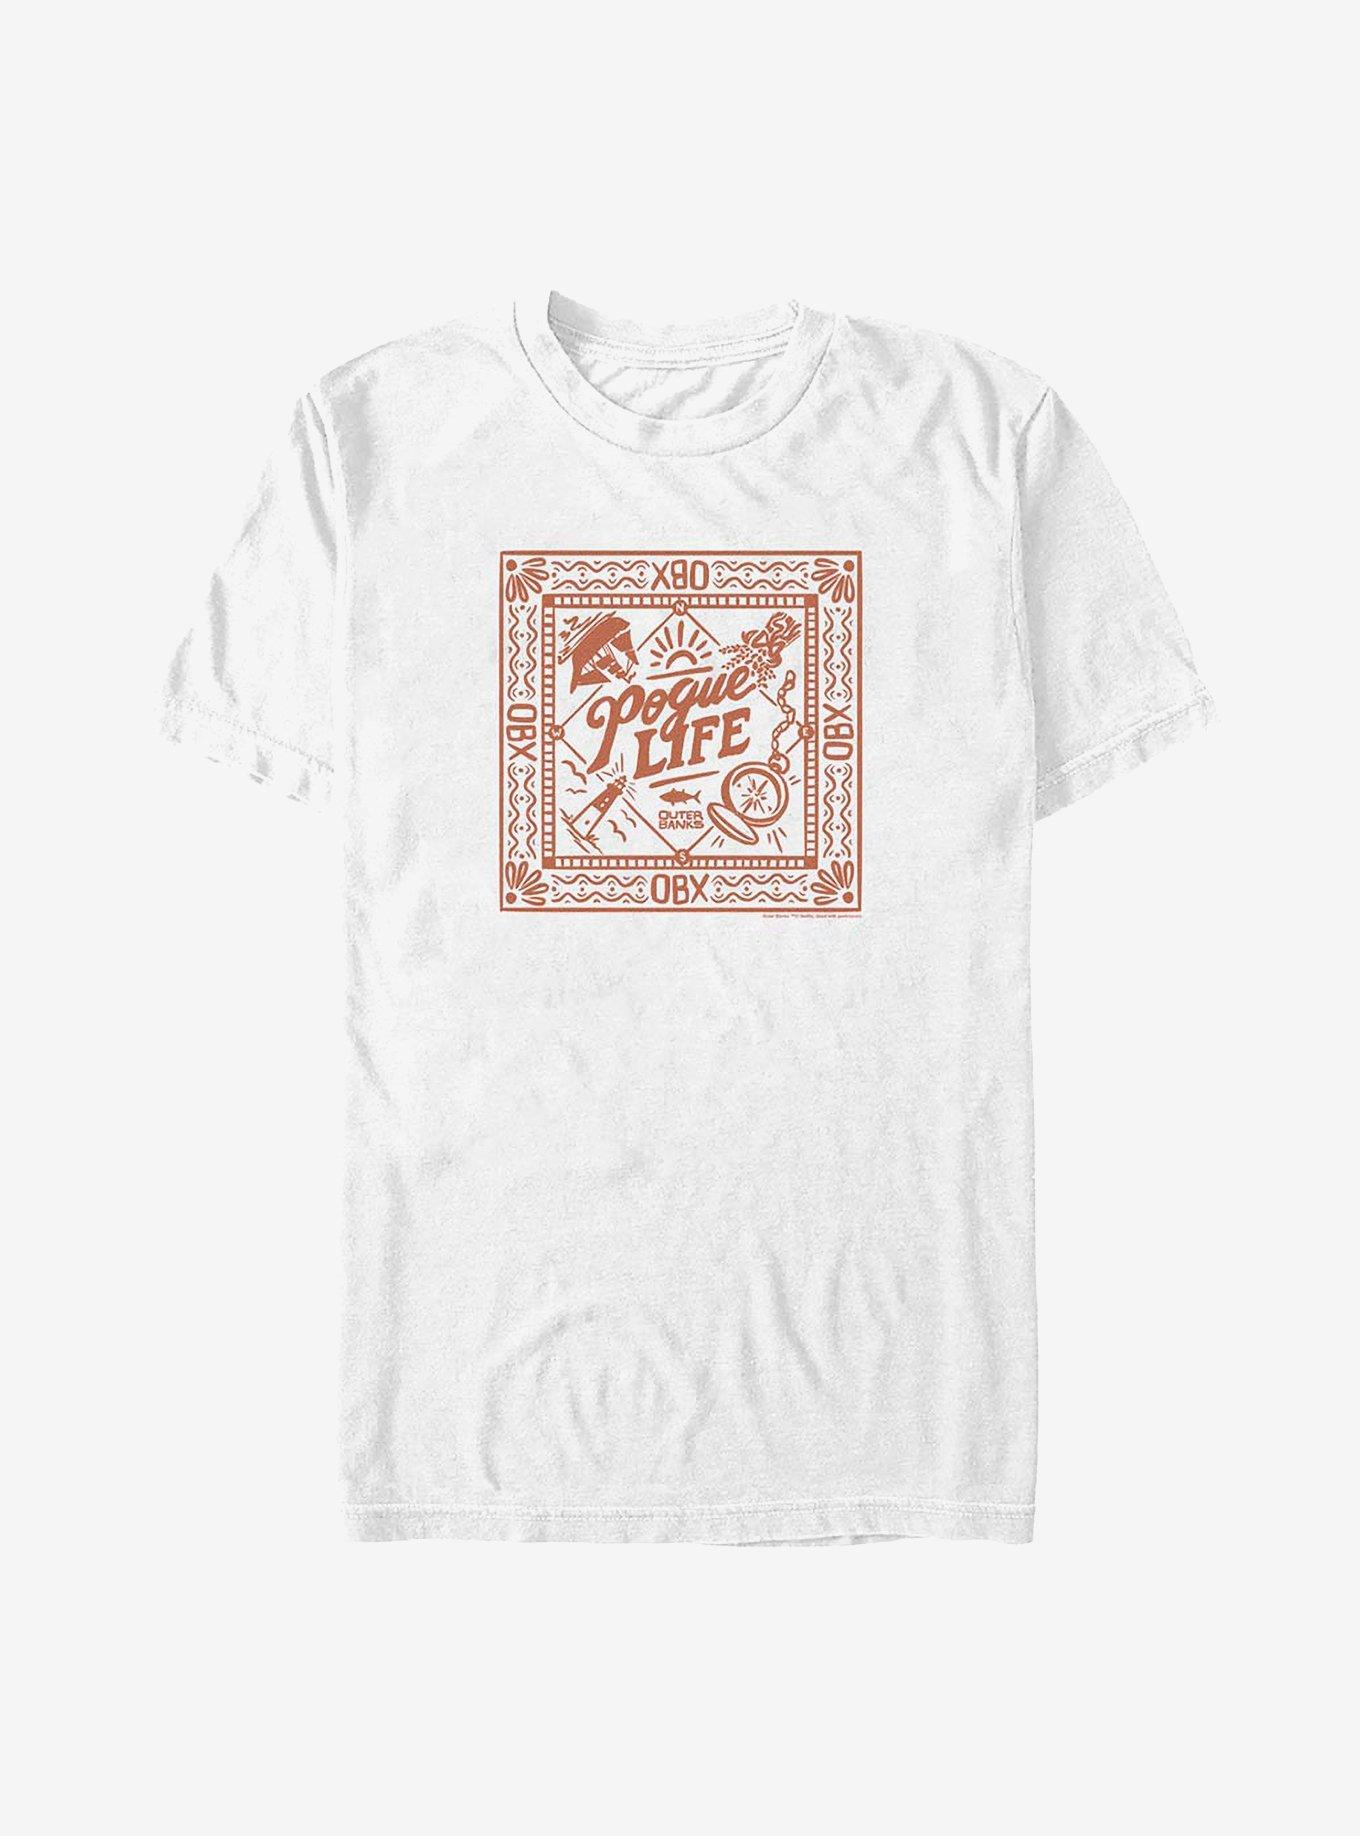 Outer Banks Pogue Life Square Frame T-Shirt, WHITE, hi-res